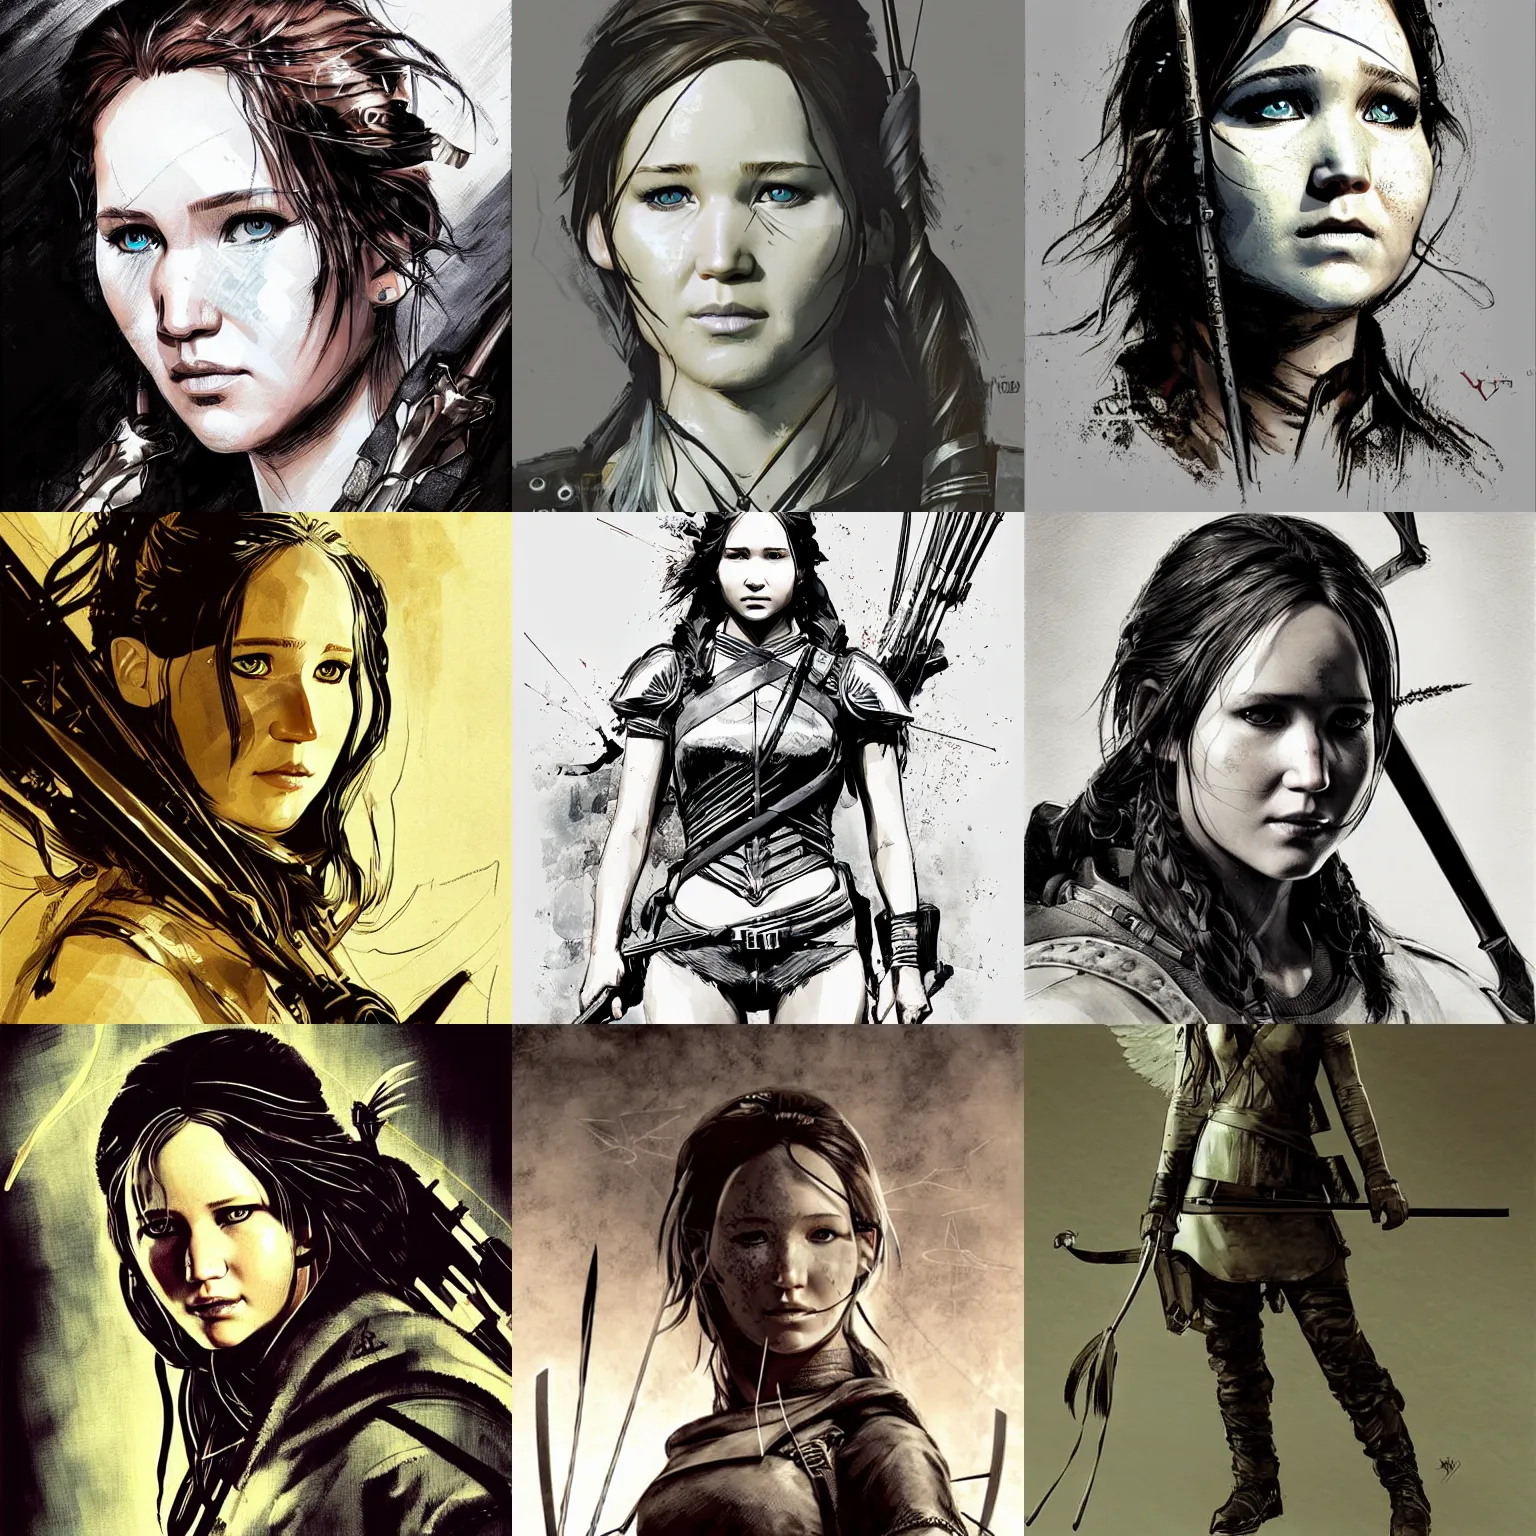 Prompt: Katniss Everdeen Viking shieldmaiden, digital portrait by Yoji Shinkawa and Greg Rutkowski